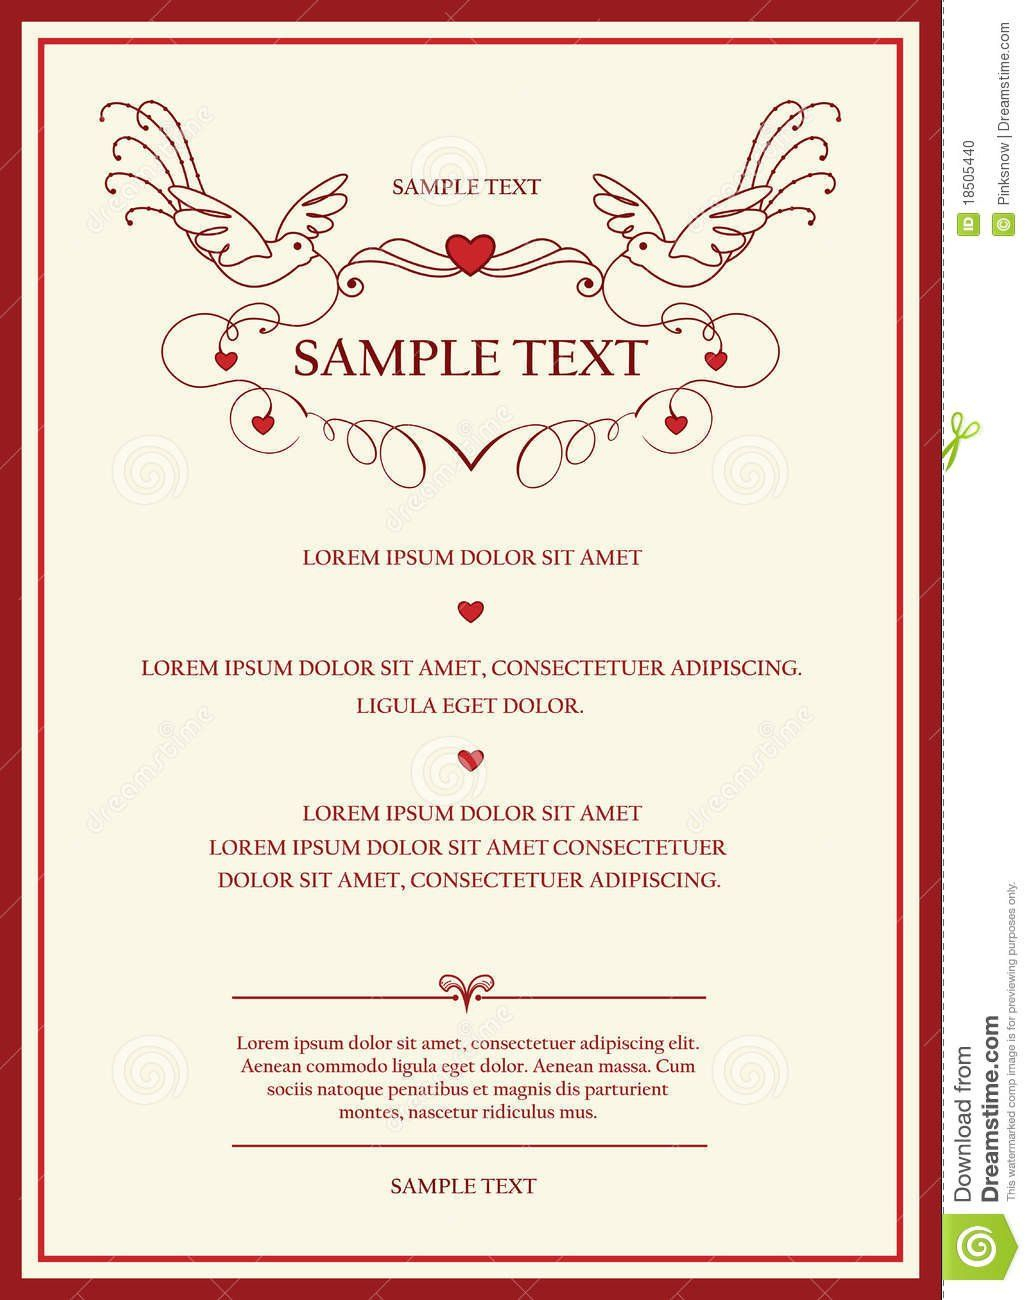 Wedding Invitation Cards Templates | Wedding Invitations In Regarding Sample Wedding Invitation Cards Templates